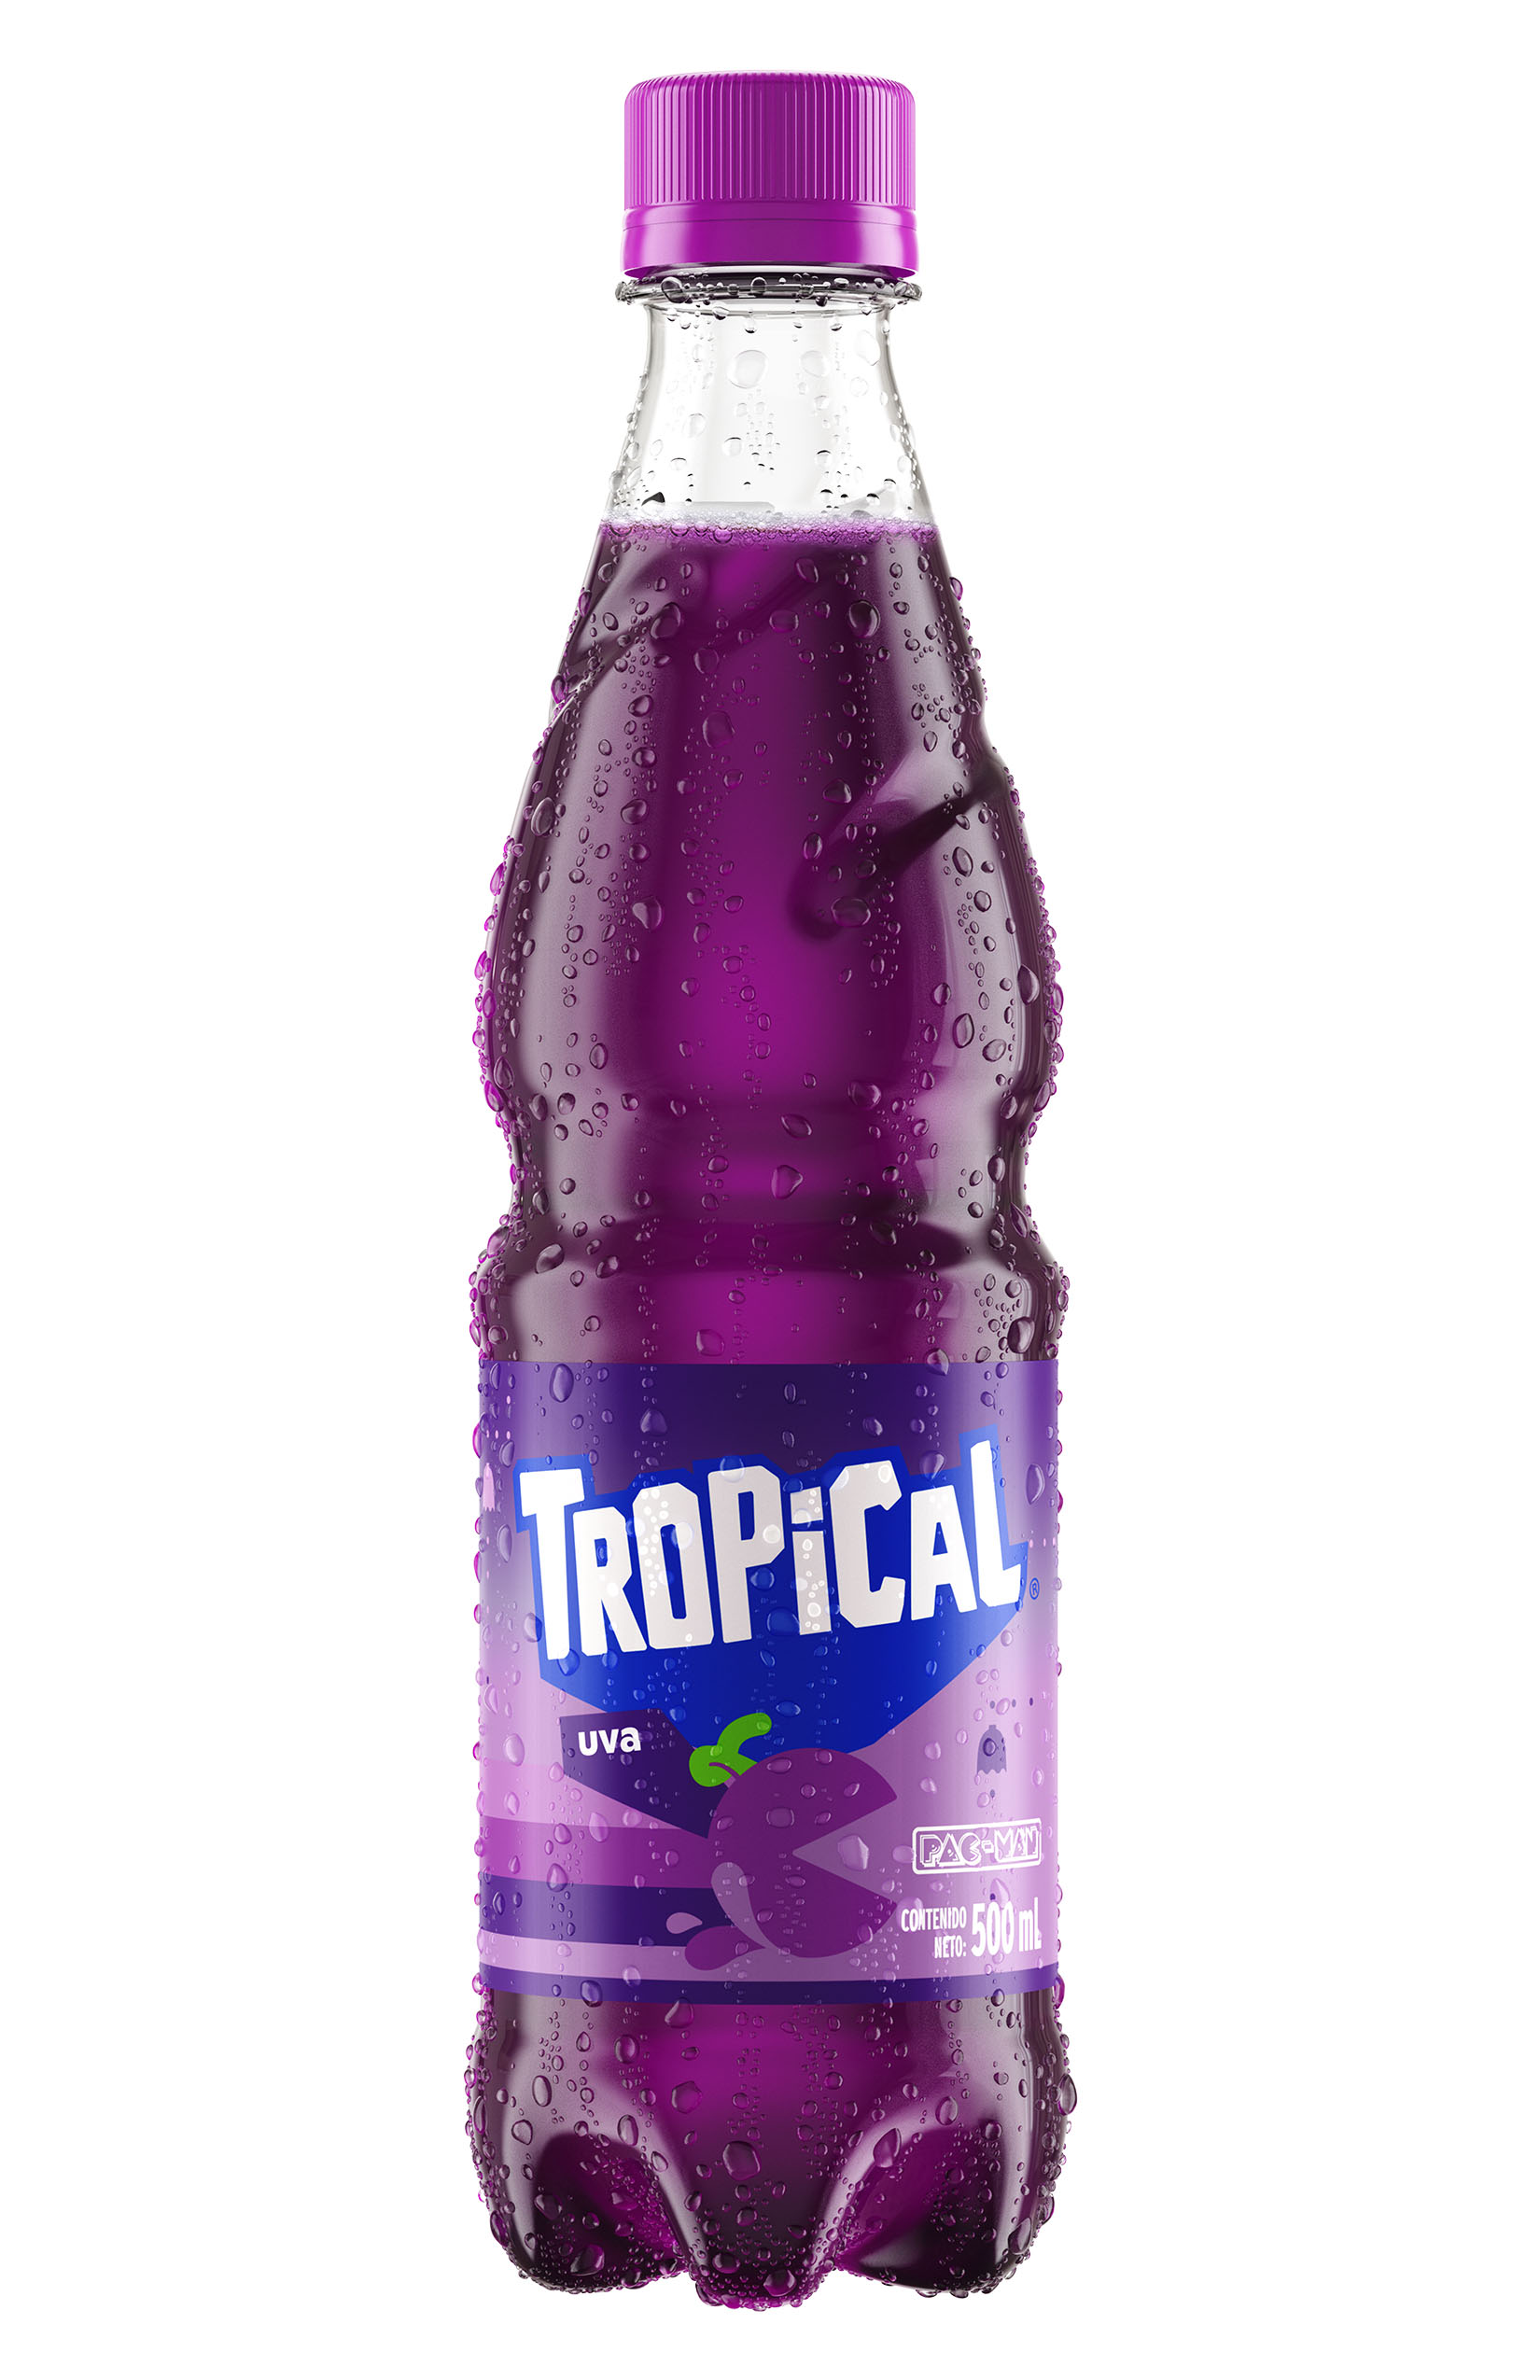 Botella de 500 ml de Tropical sabor uva en su edición limitada Tropical Pac-man